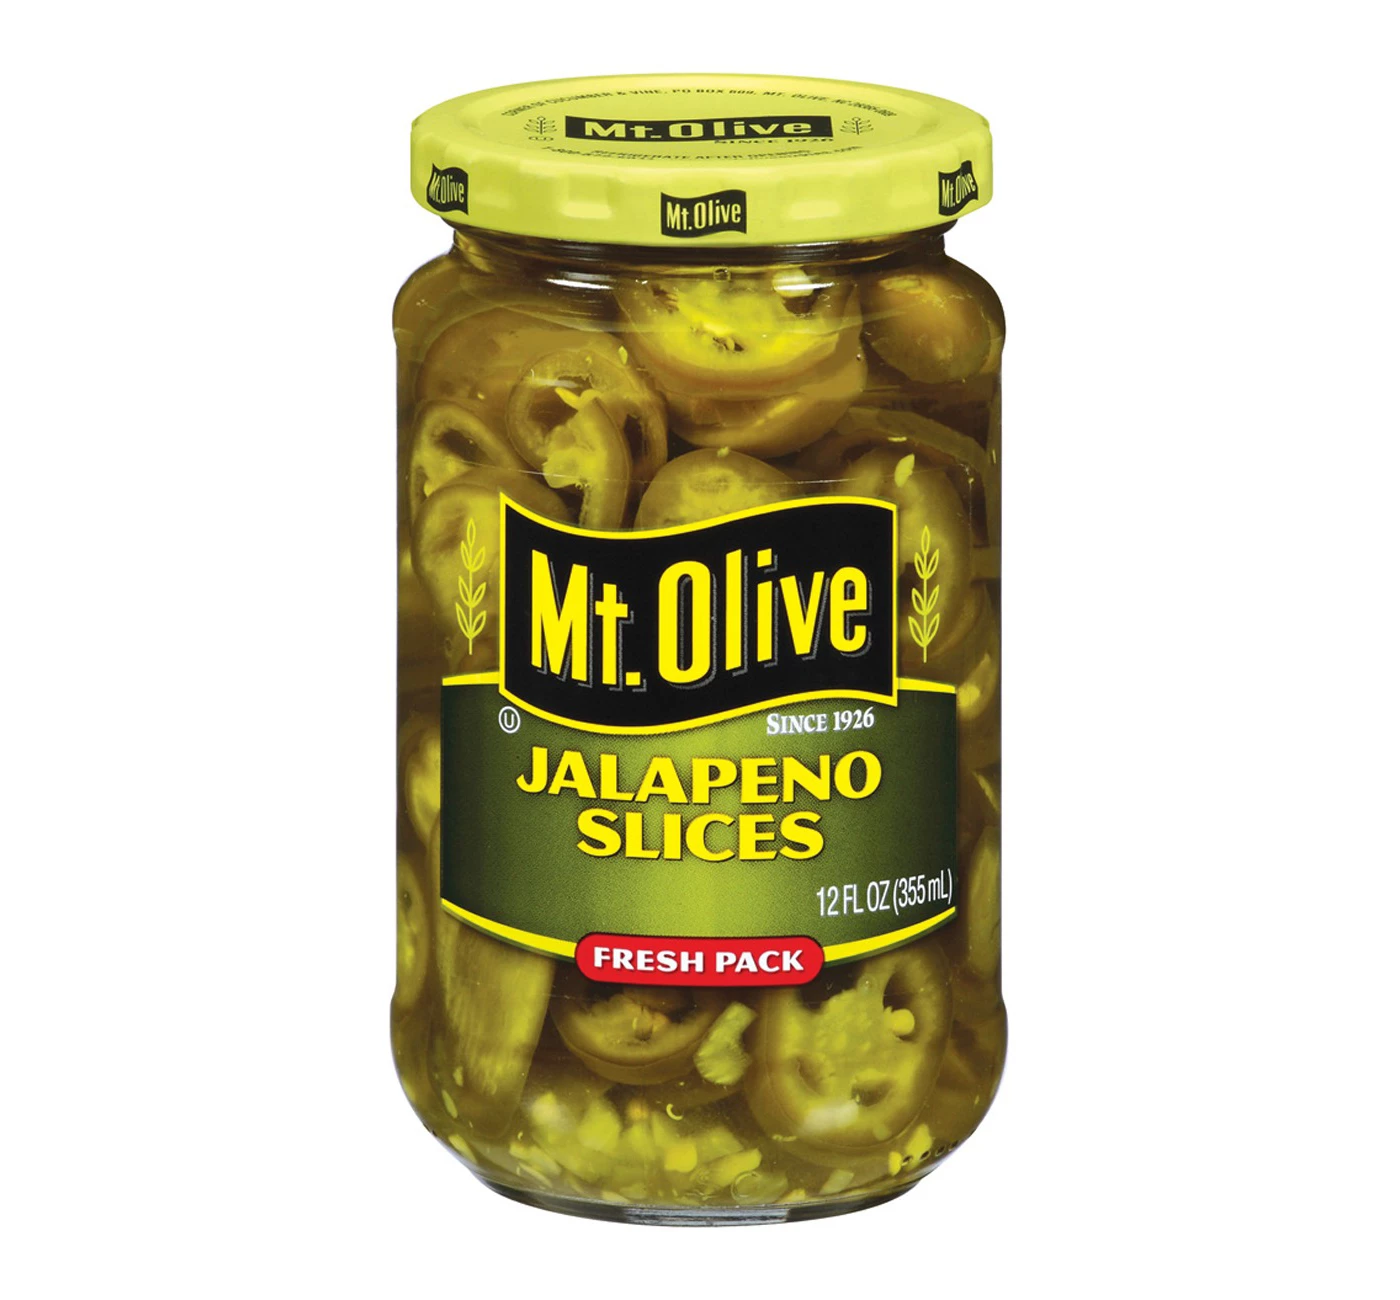 Mt. OliveÂ® Jalapeno Slices - 12oz - image 1 of 1